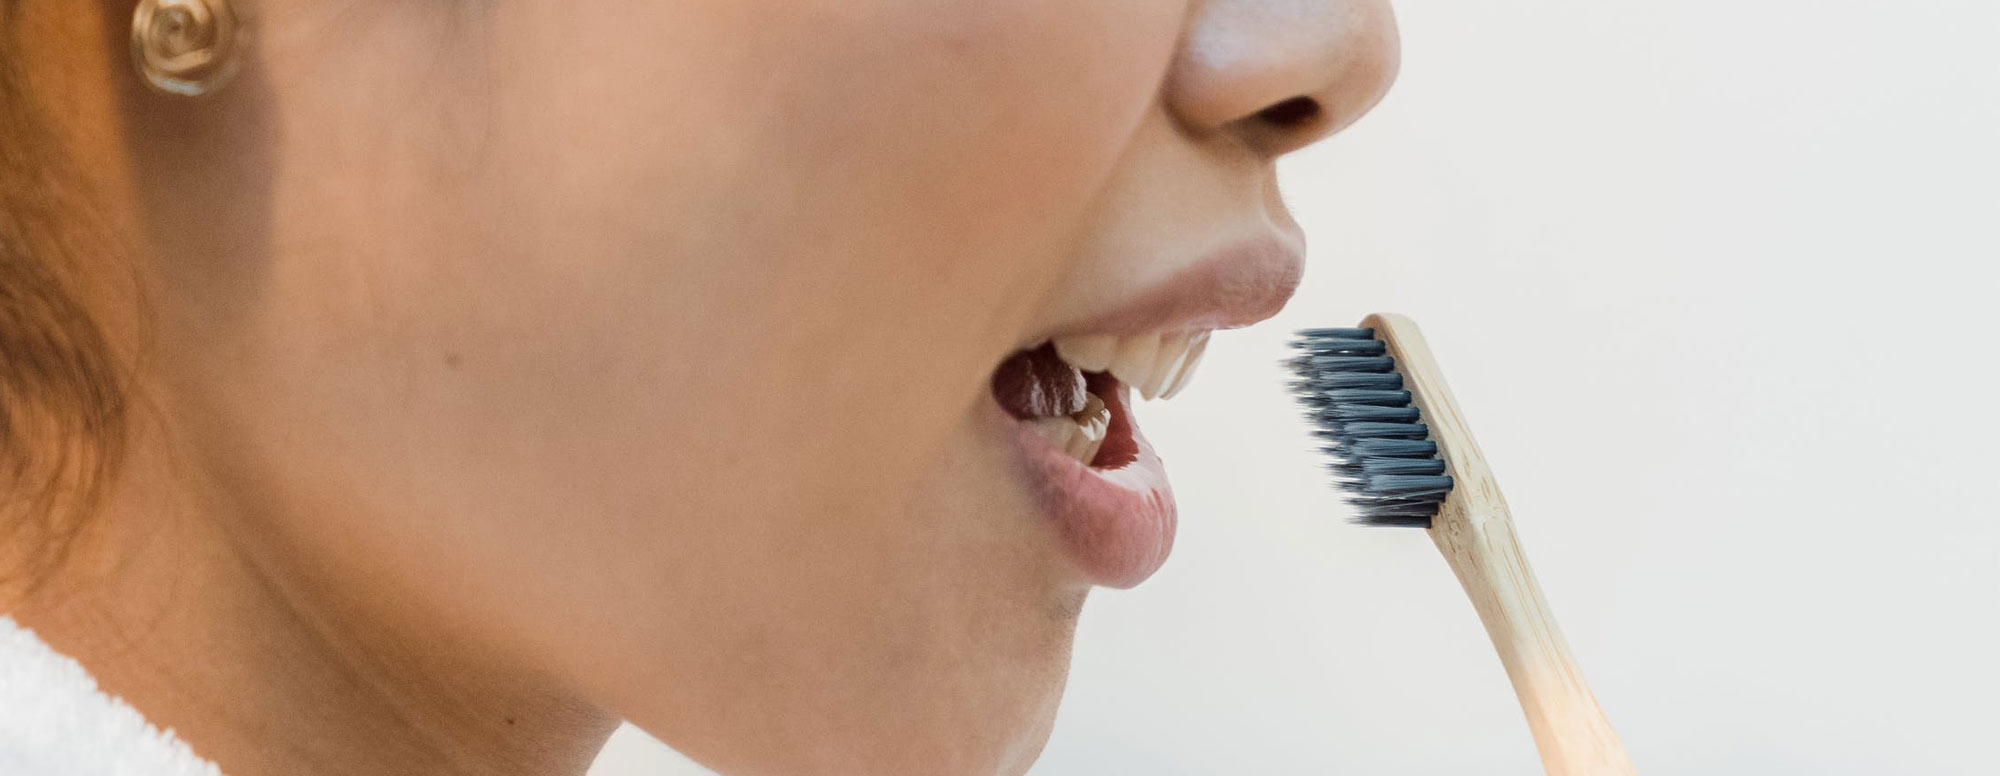 woman wish toothbrush near teeth